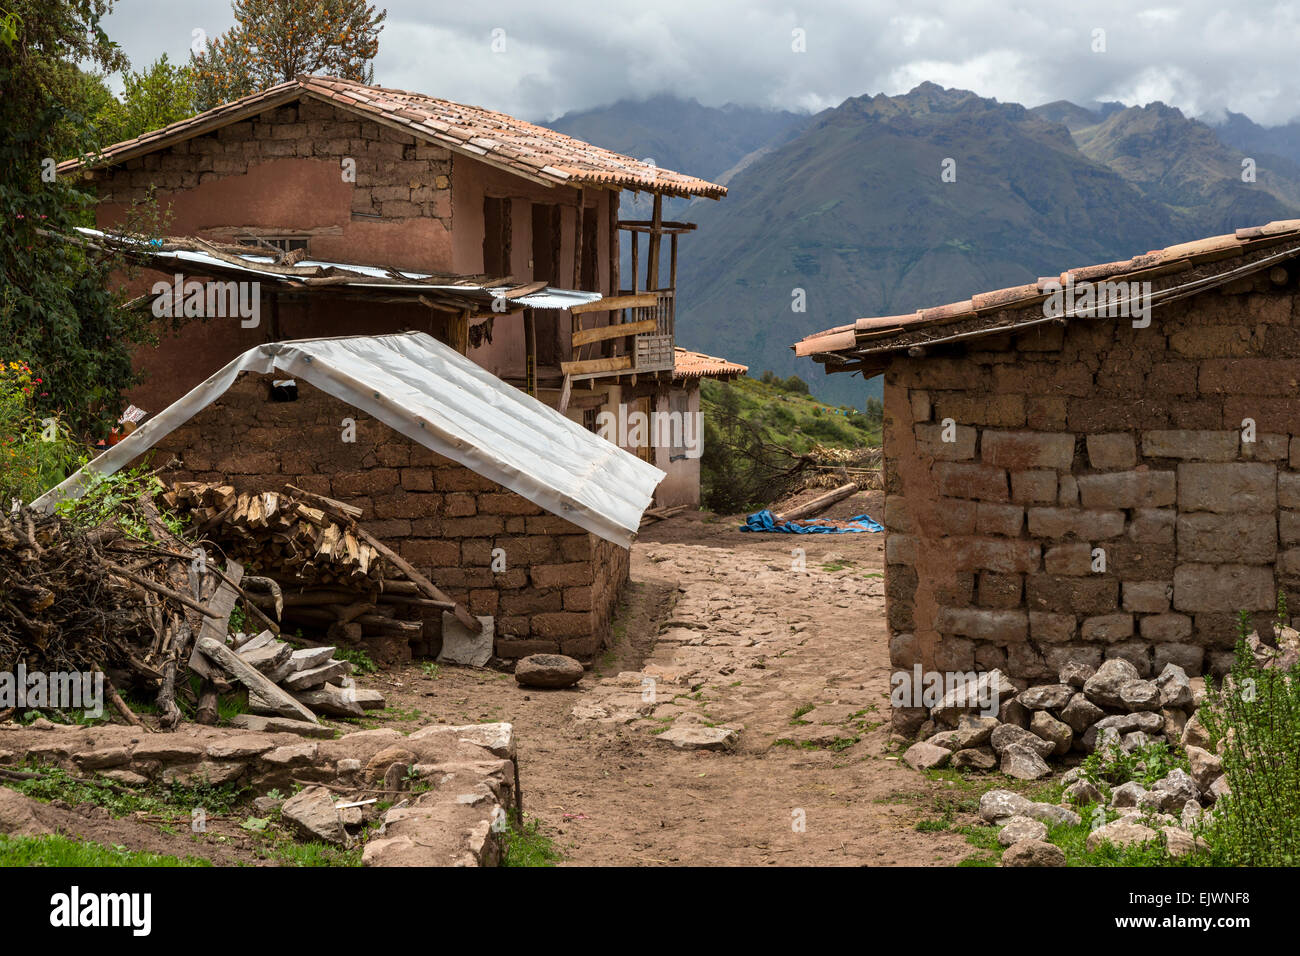 Peru, Urubamba Valley, Quechua Village of Misminay.  House under Construction, Adding a Second Story. Stock Photo